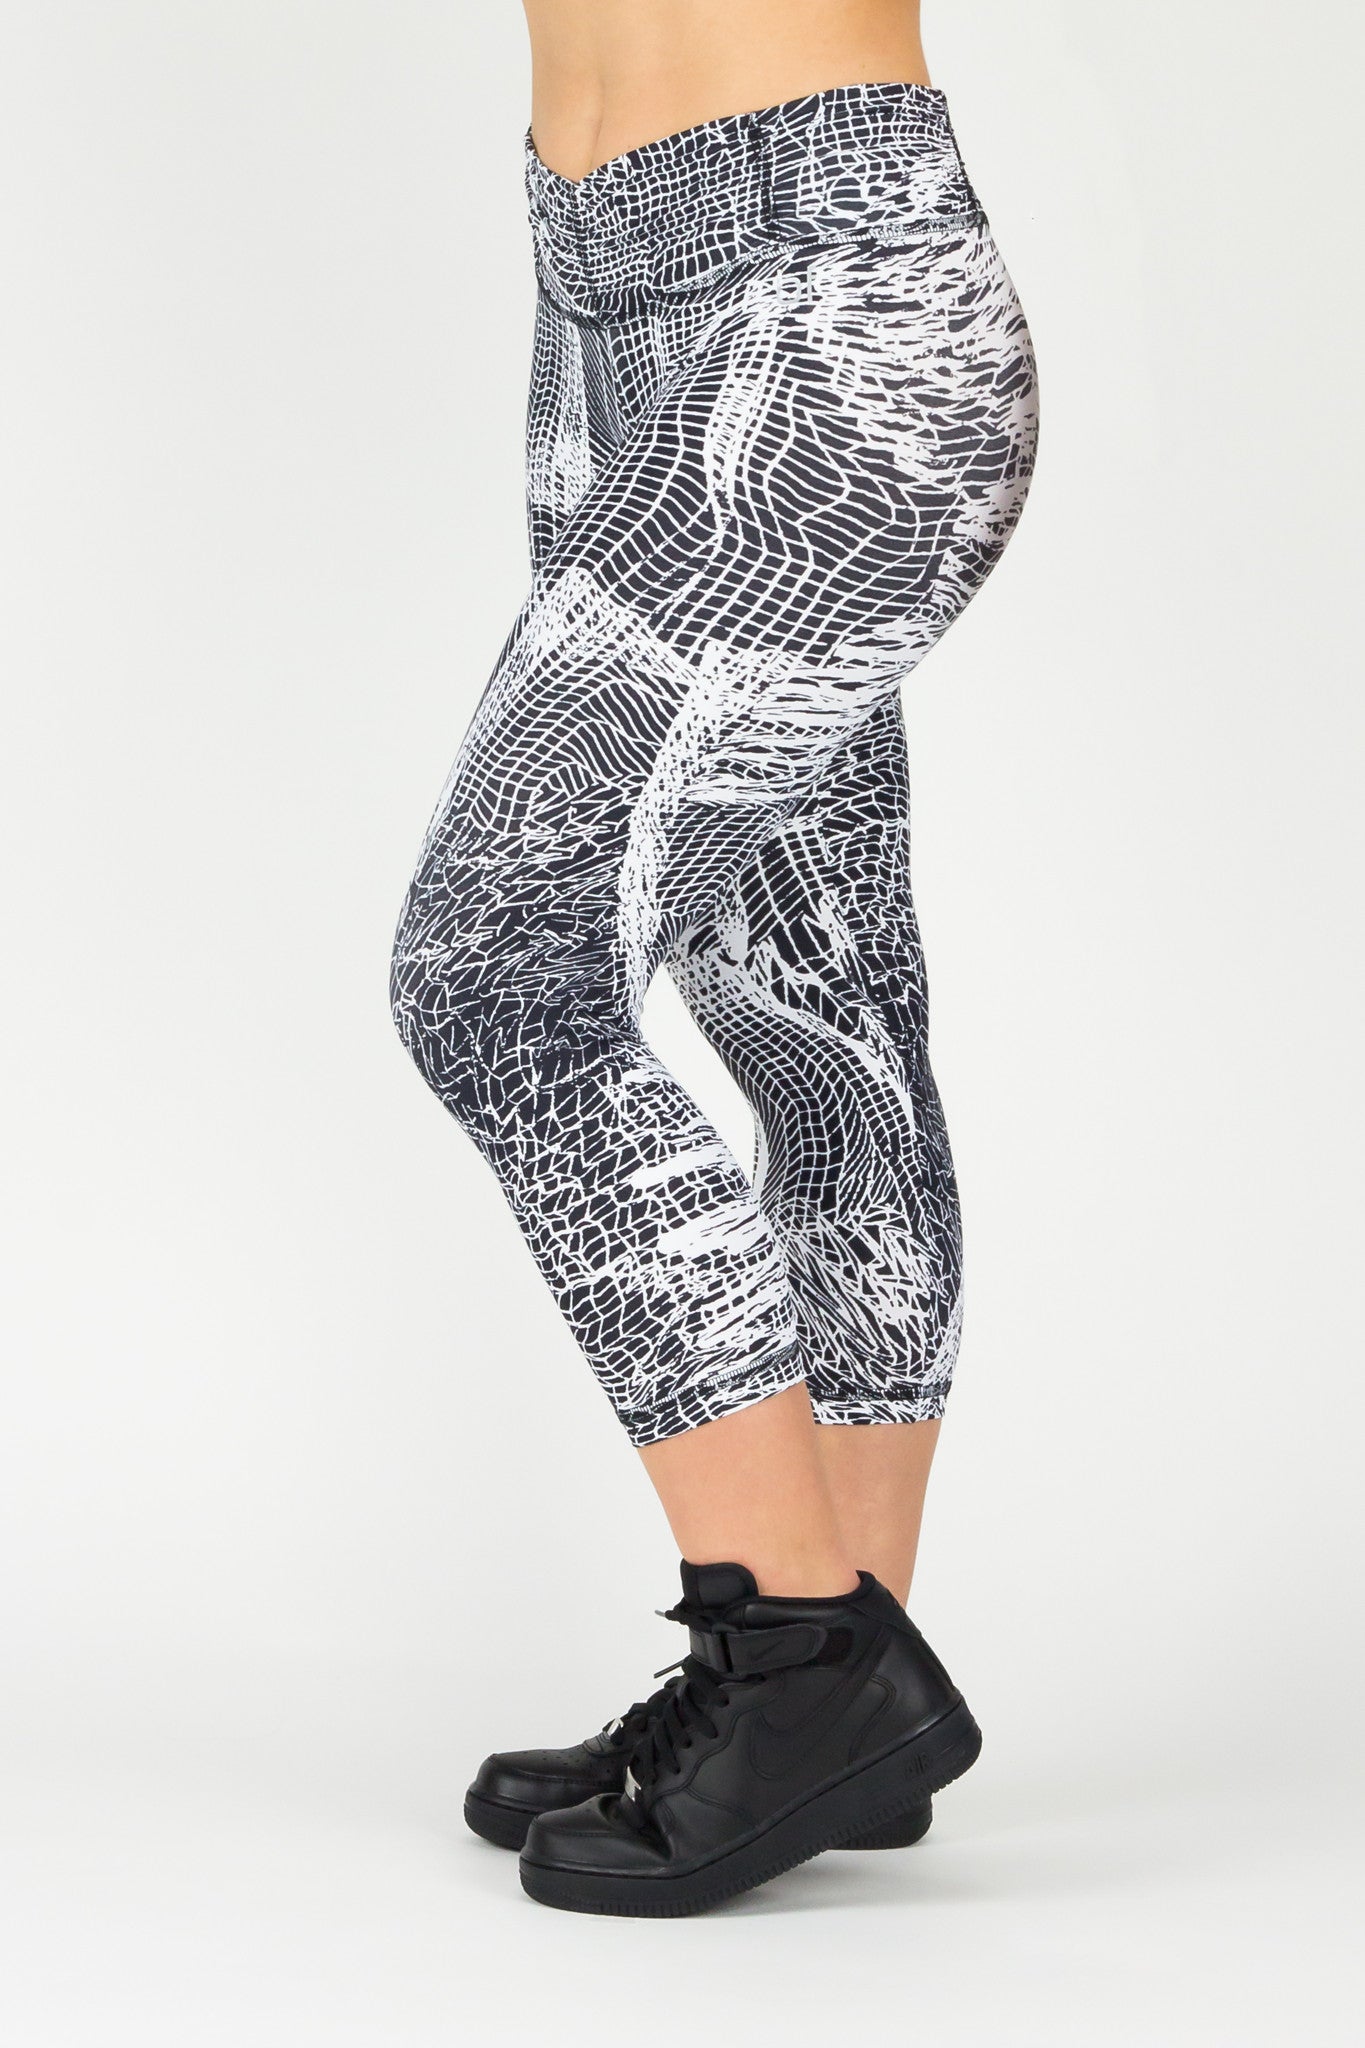 Legging Crazy Print - Amni, Black and White Web